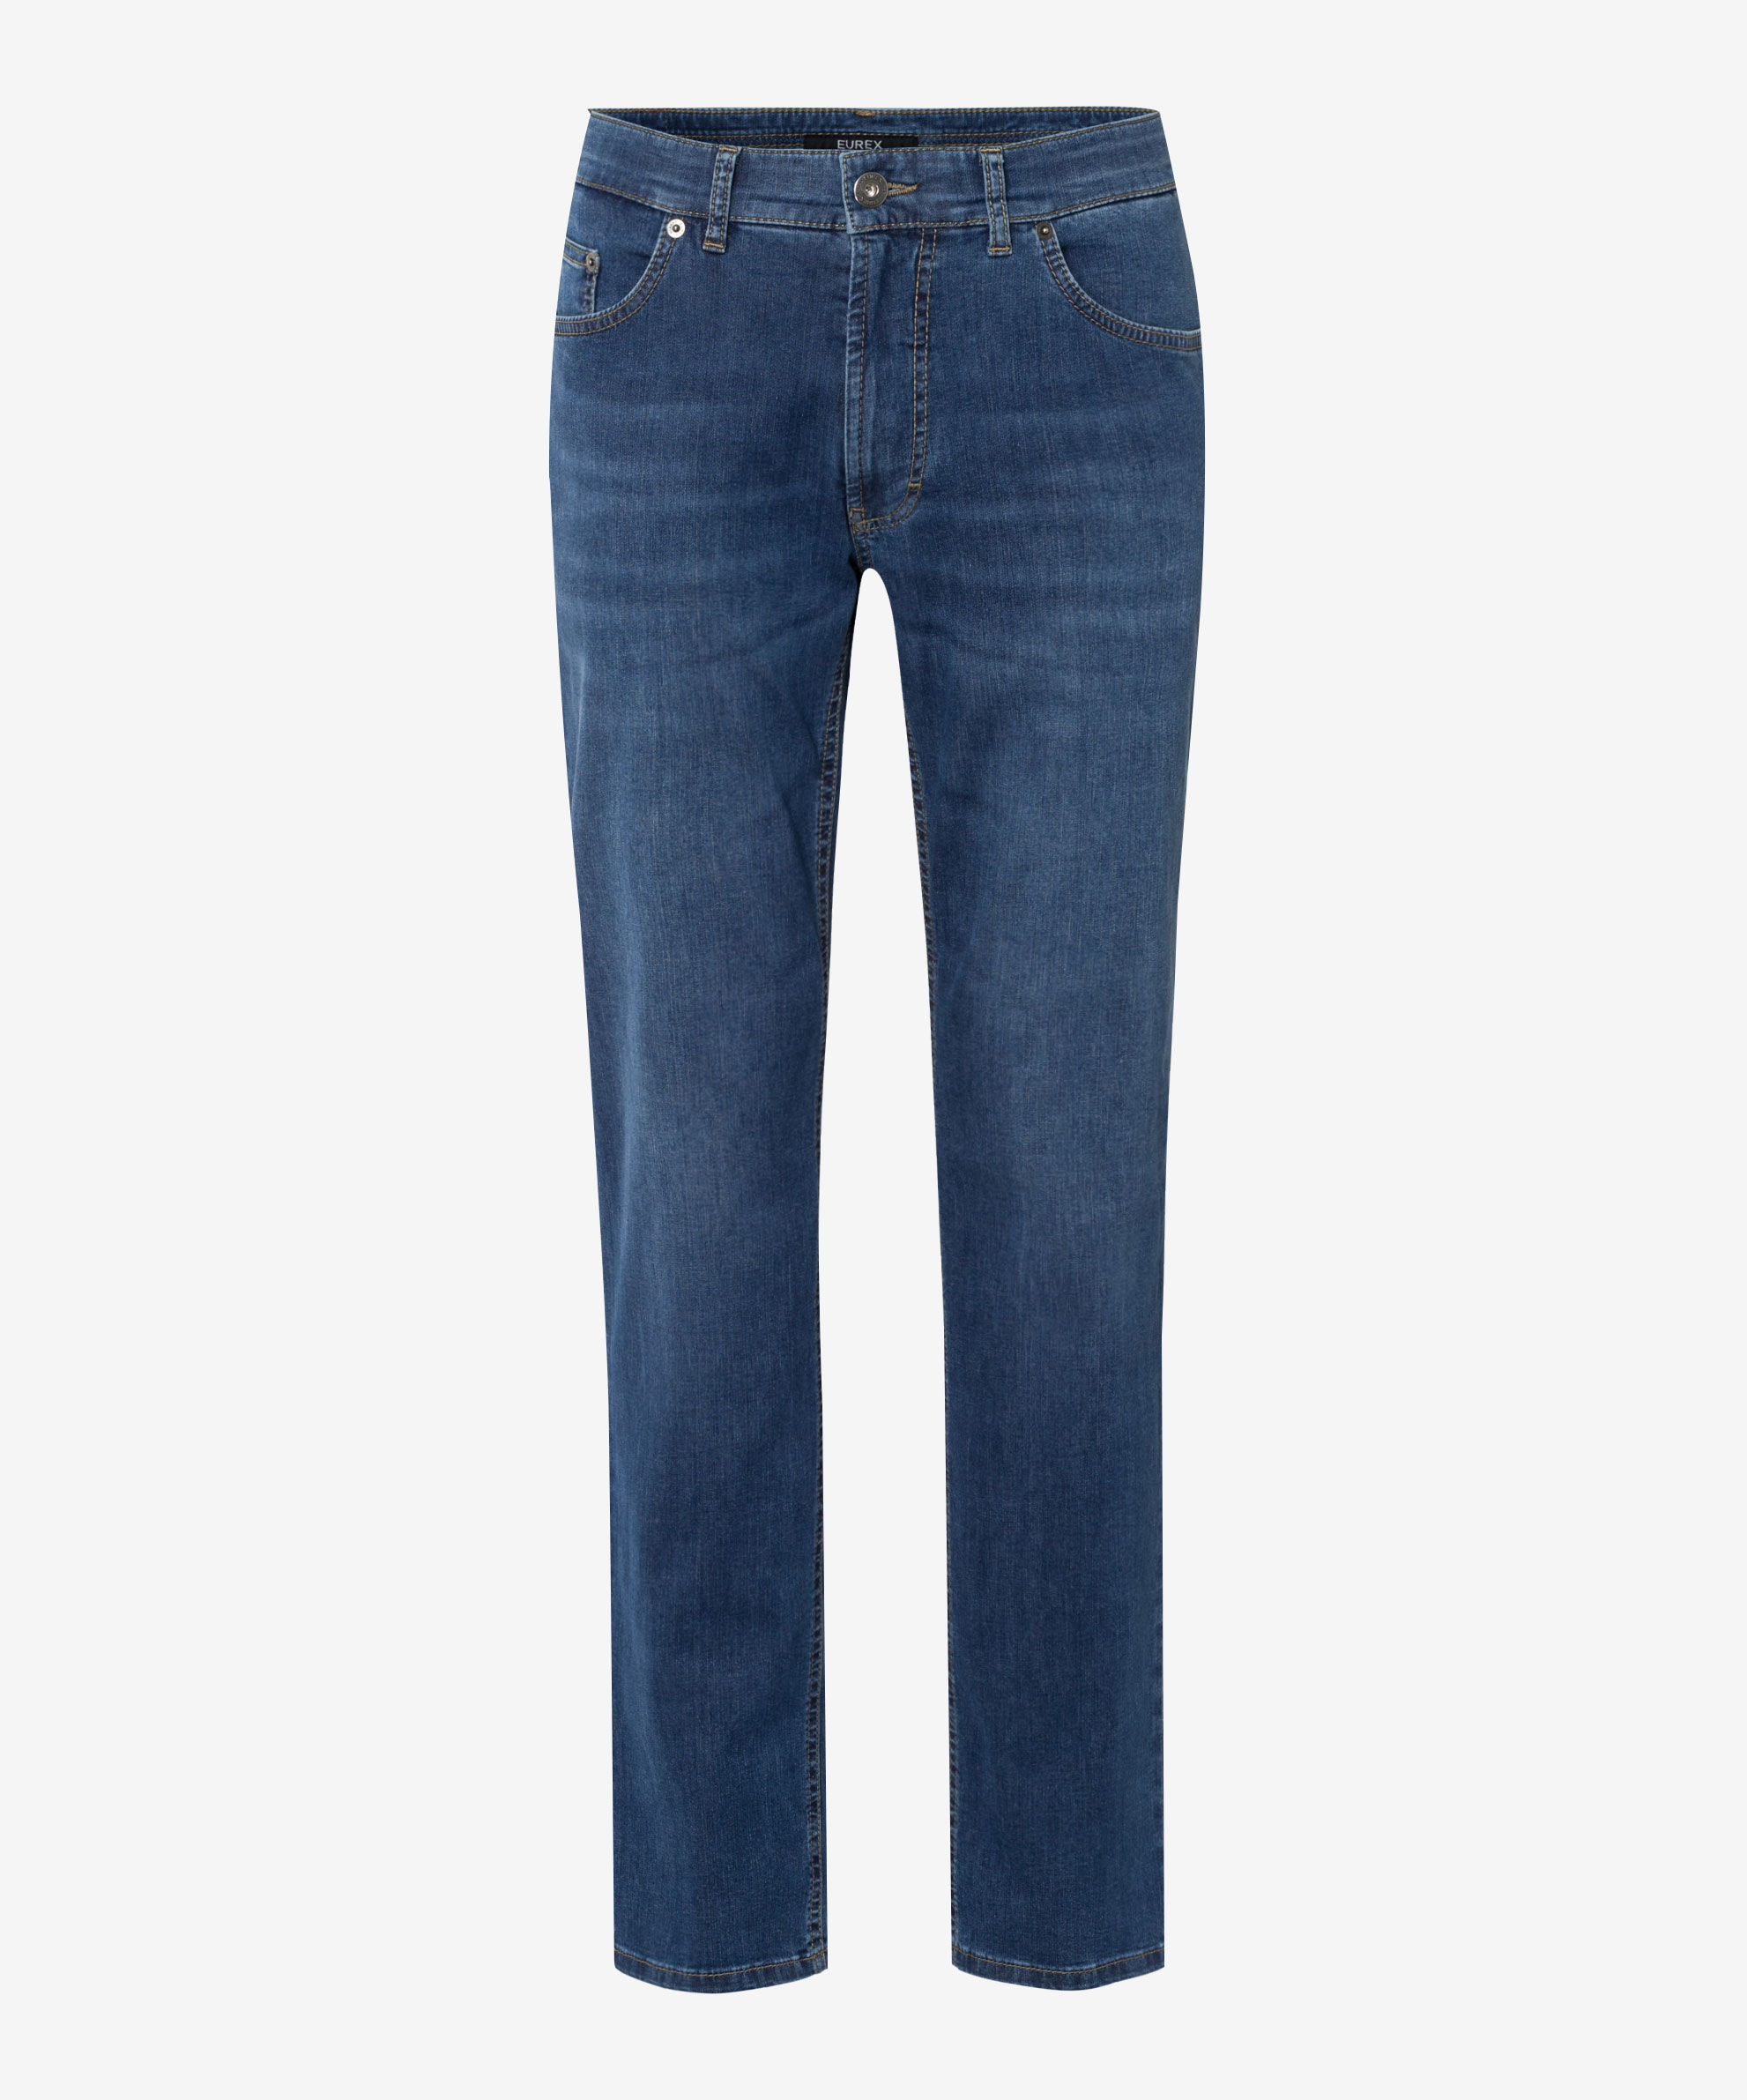 Pocket | Men\'s Five Stone Rozing Jeans Carlos Brax Blue Denim Fashion Jan Authentic